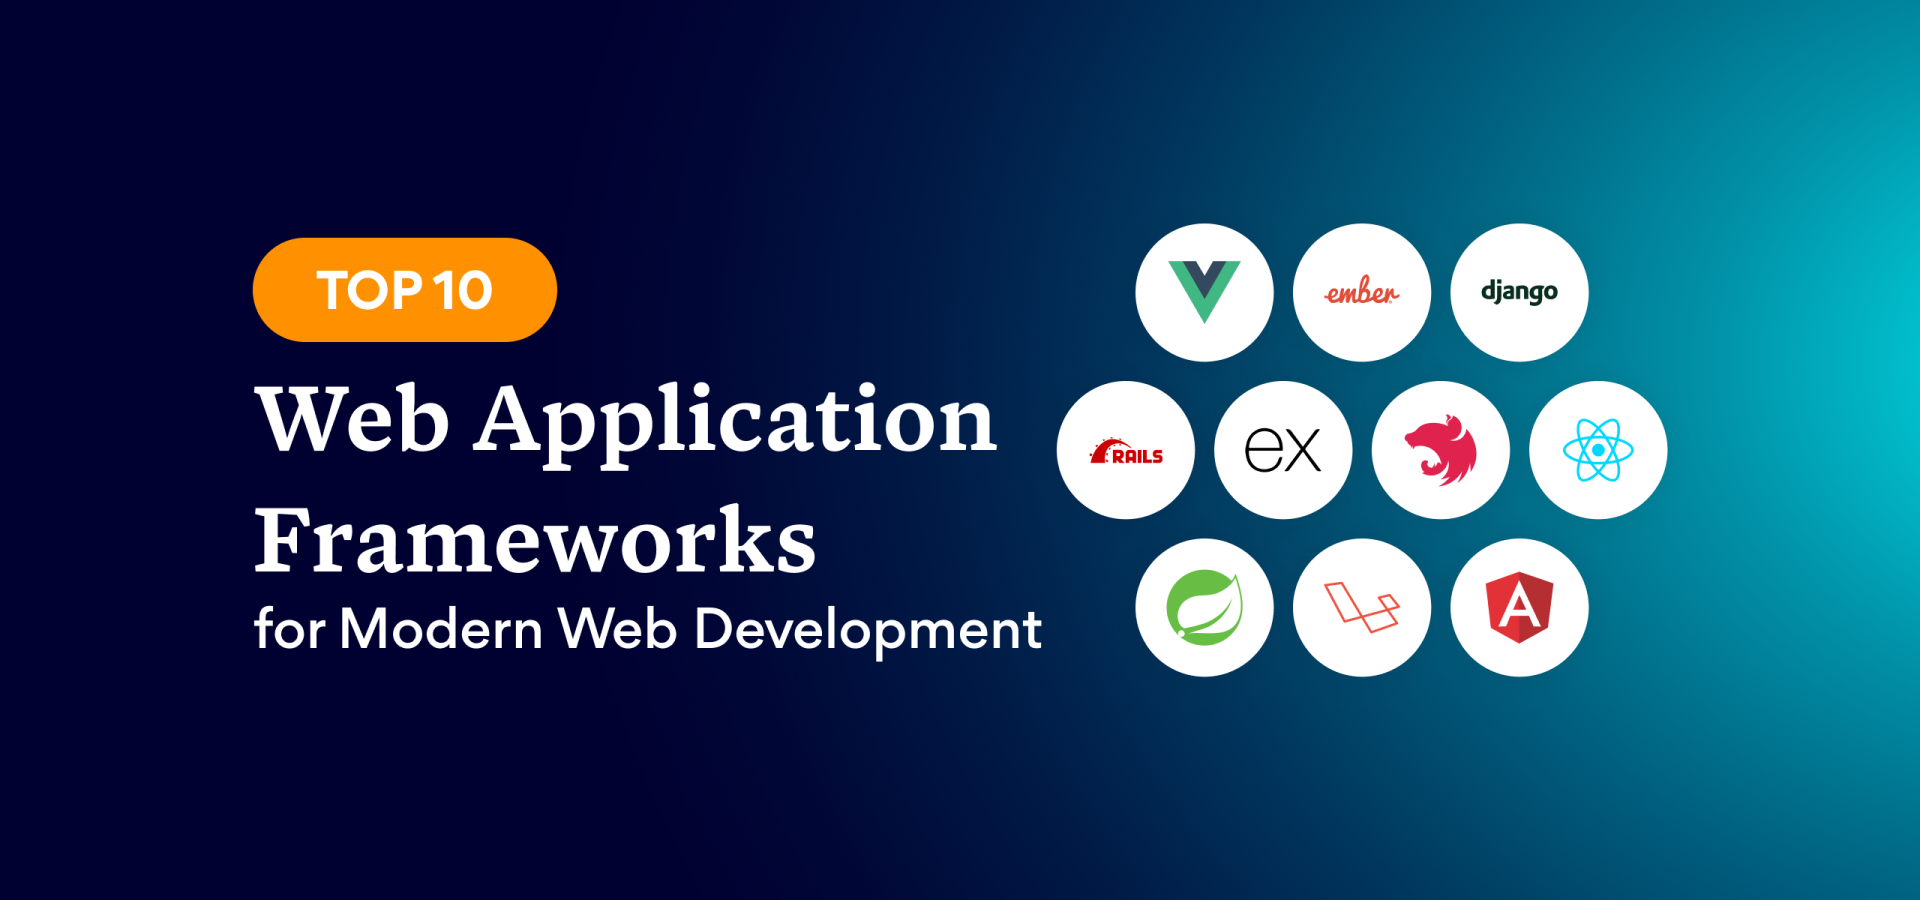 Top 10 Web Application Frameworks for Modern Web Development